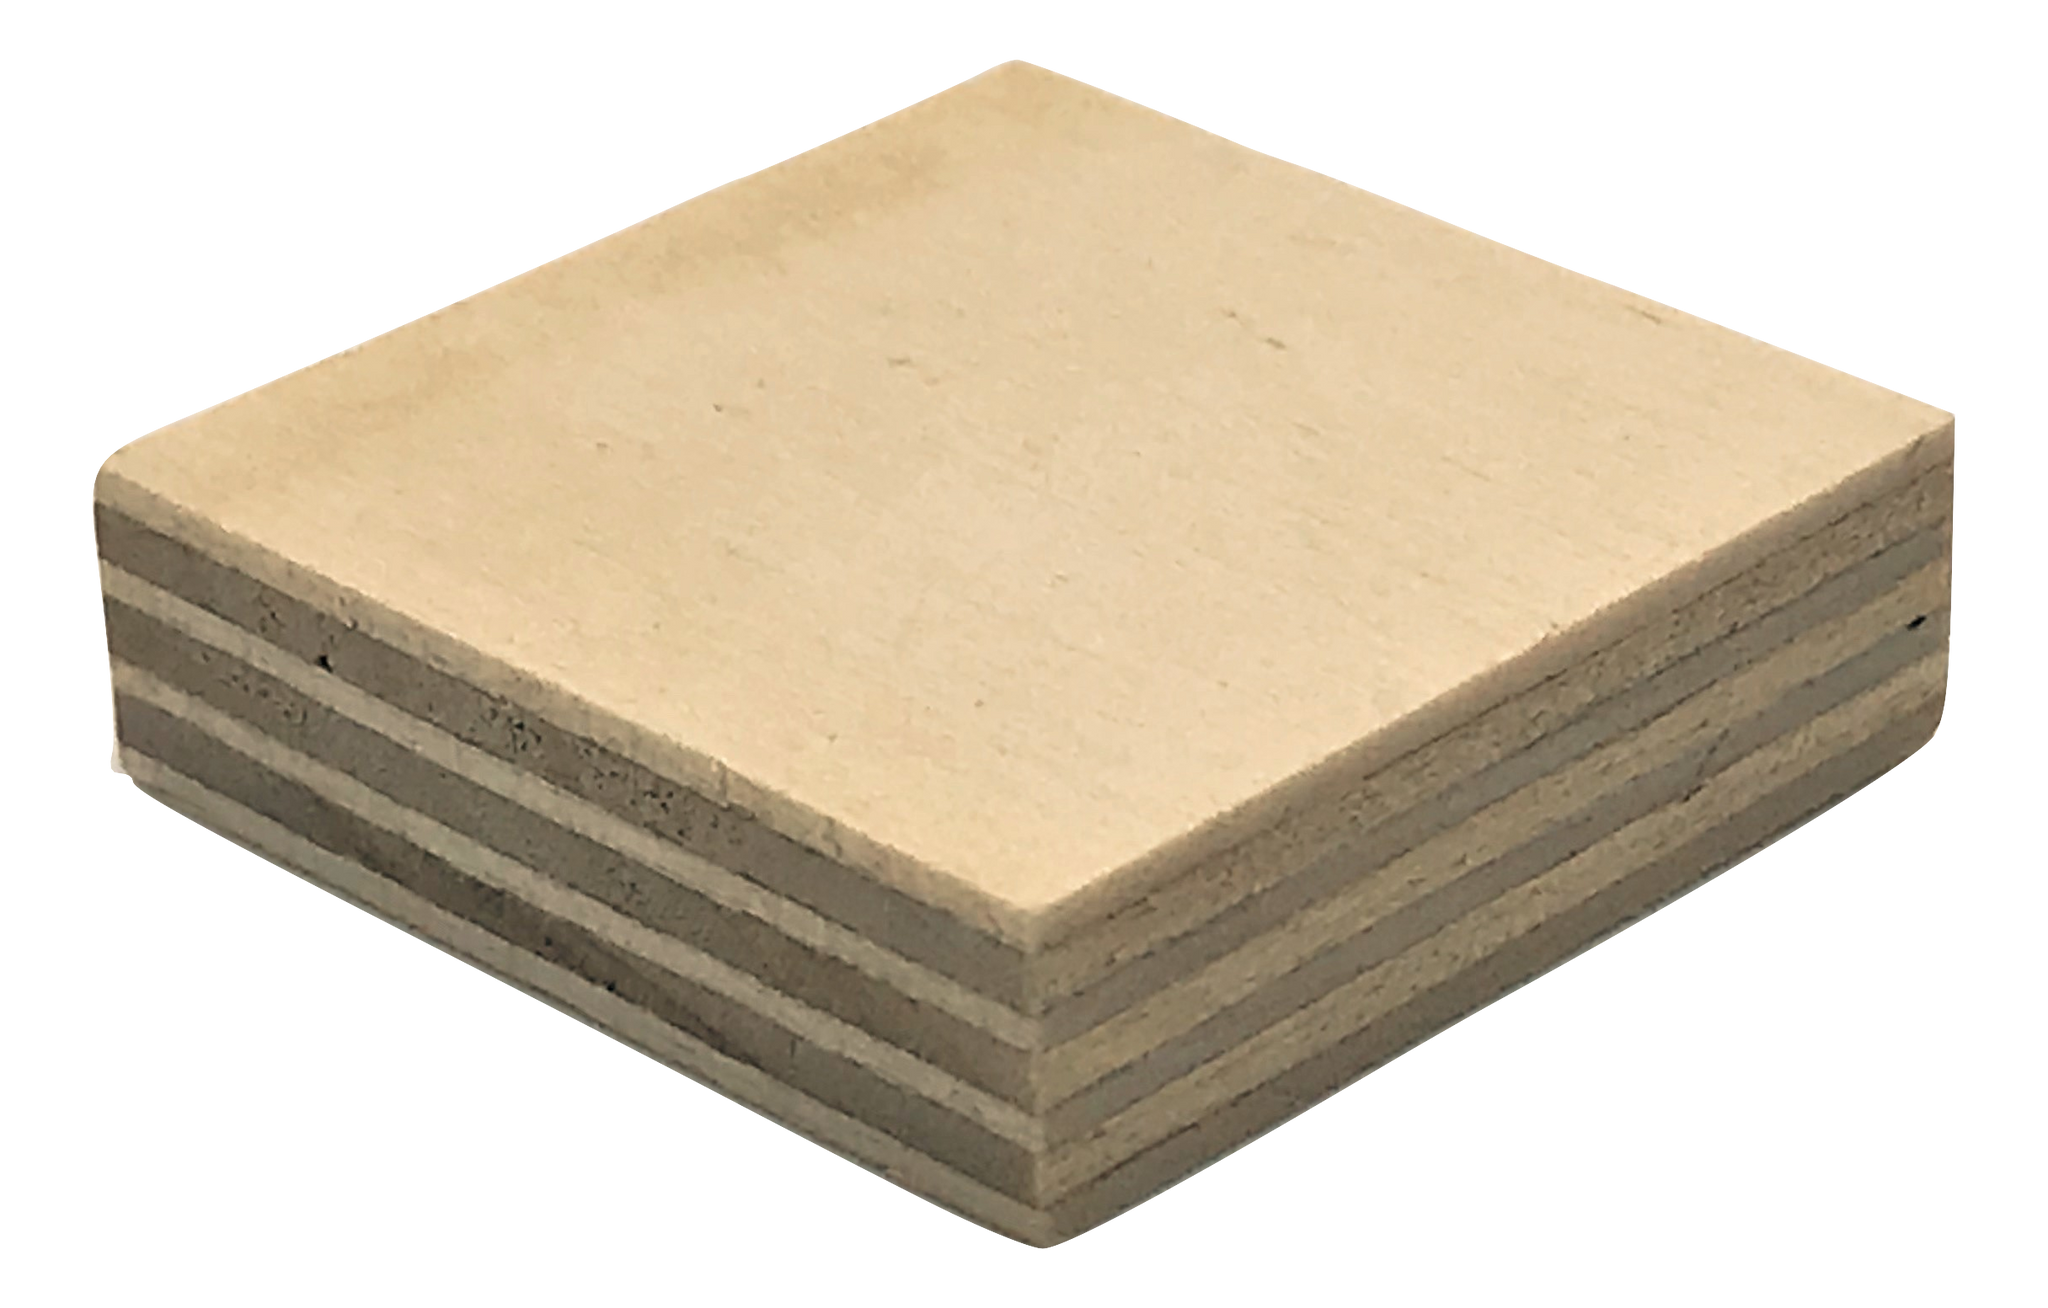 Dofiki 6 Pcs 3mm Baltic Birch Plywood 1/8 x11.8x 11.8” Plywood Board for  Laser Cutting Engraving Wood Burning DIY 300 x300 x3mm Birch Sheet